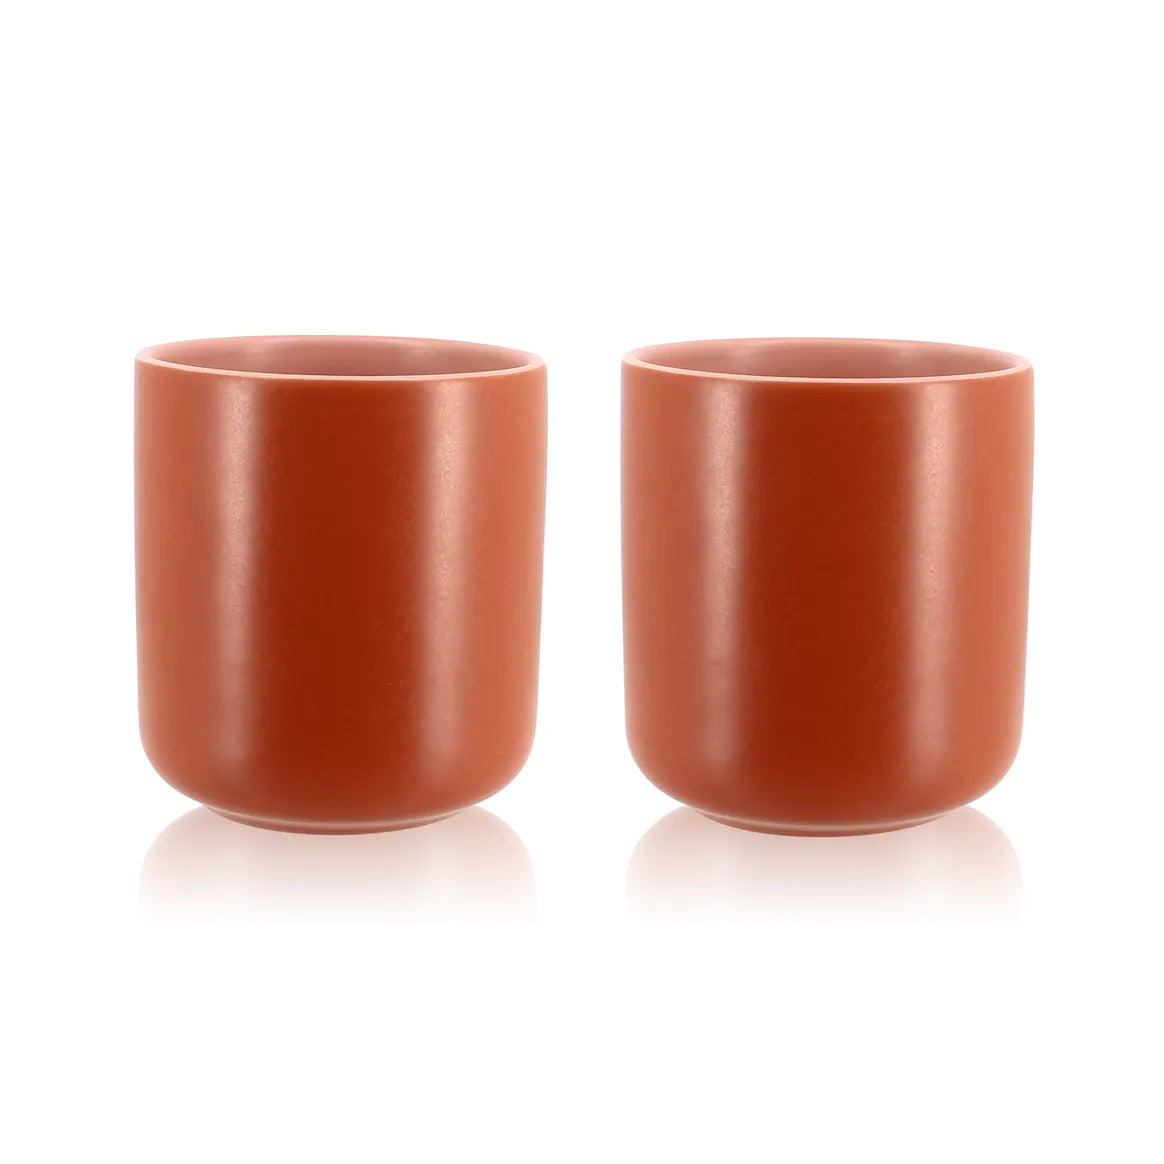 Pair of Ceramic Tea Mugs